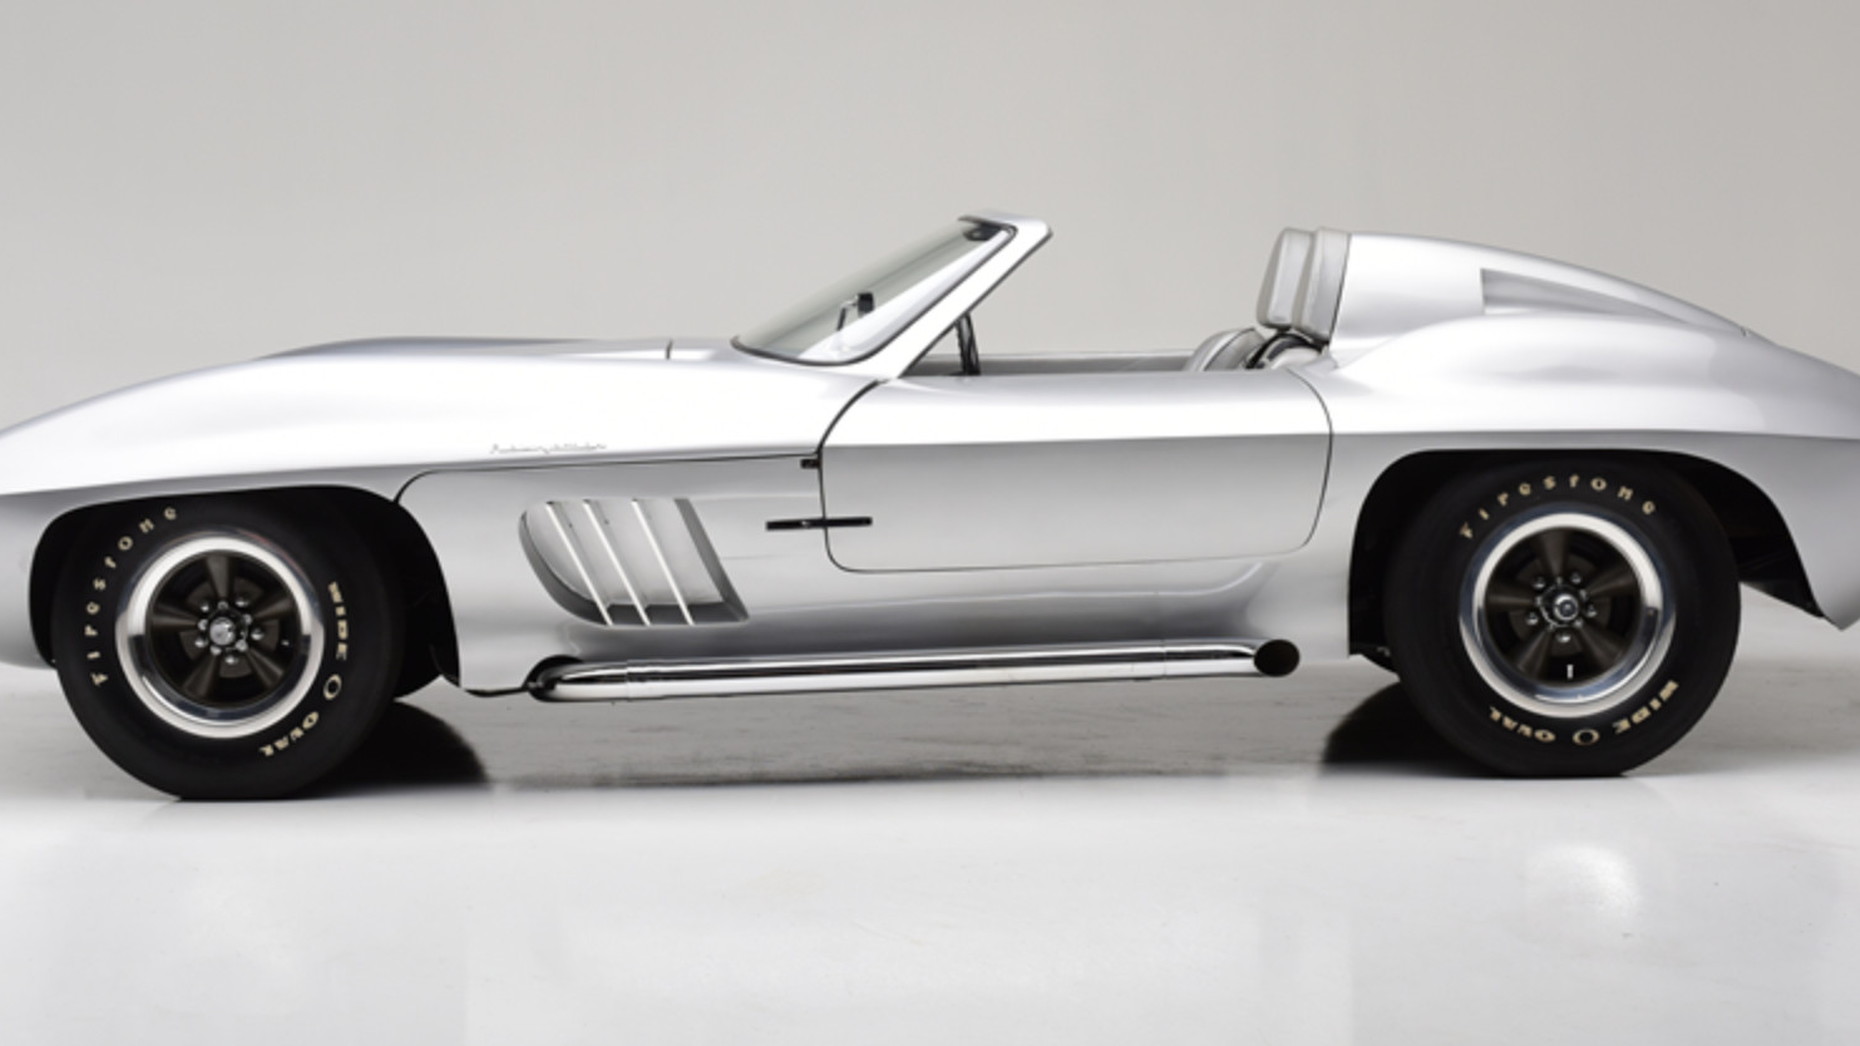 1958 Centurion C1 Corvette-based C2 race car